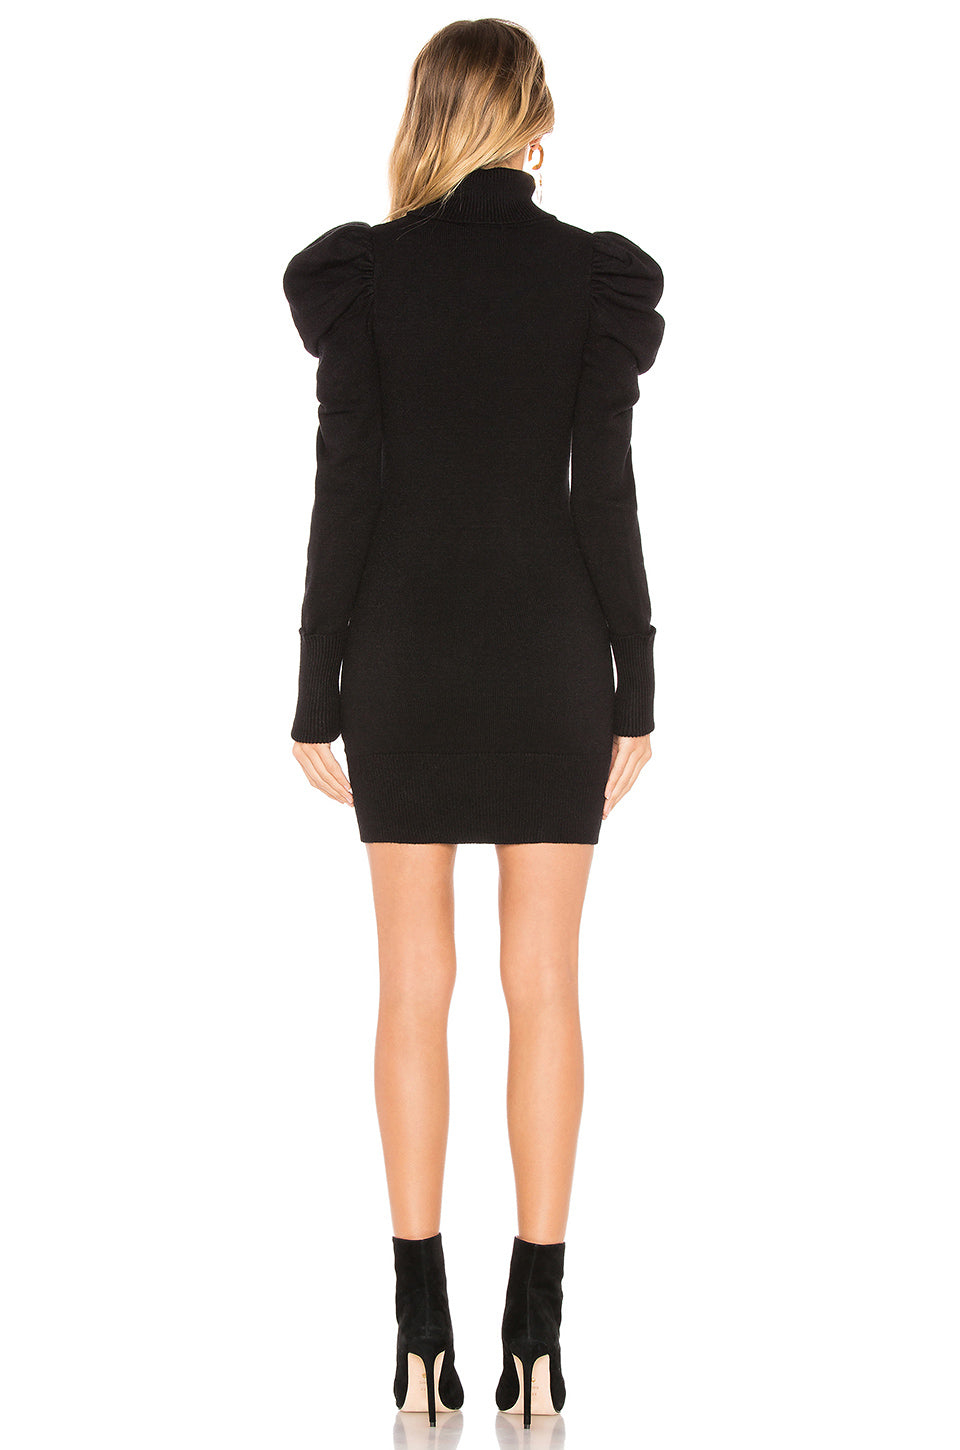 Marsha Sweater Dress in BLACK